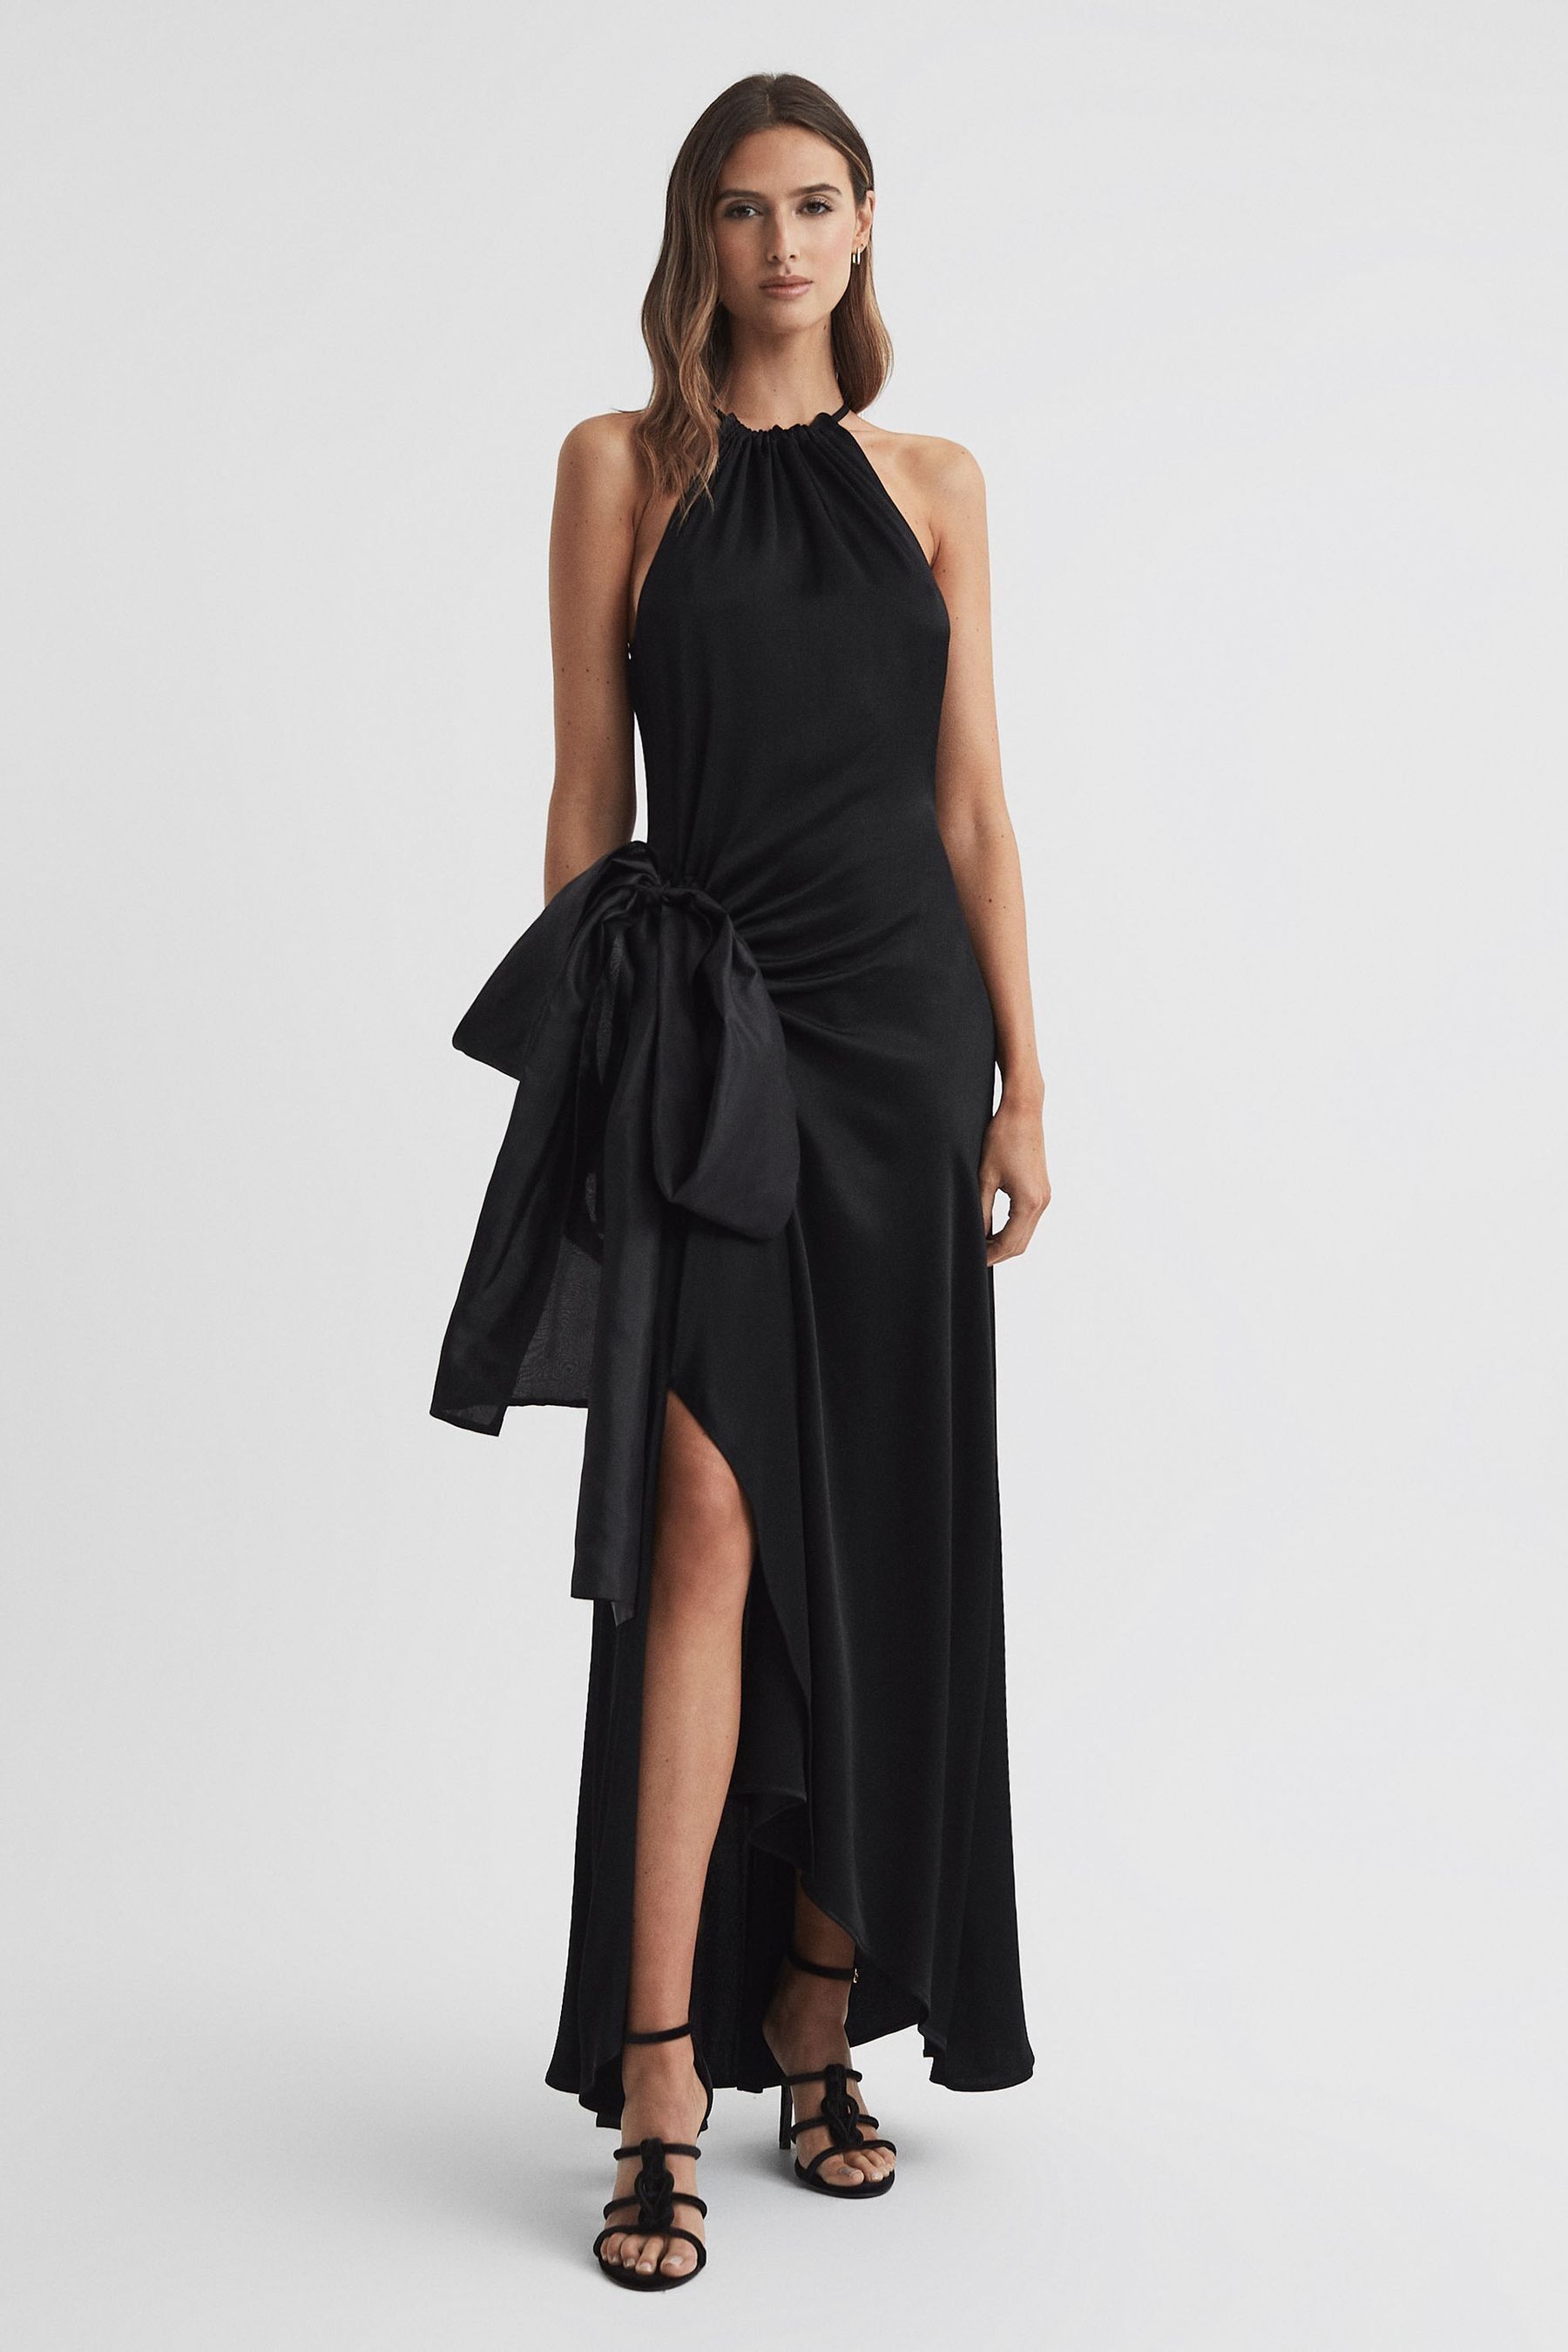 Reiss Luna - Black Satin Bow Halterneck Maxi Dress, Us 6